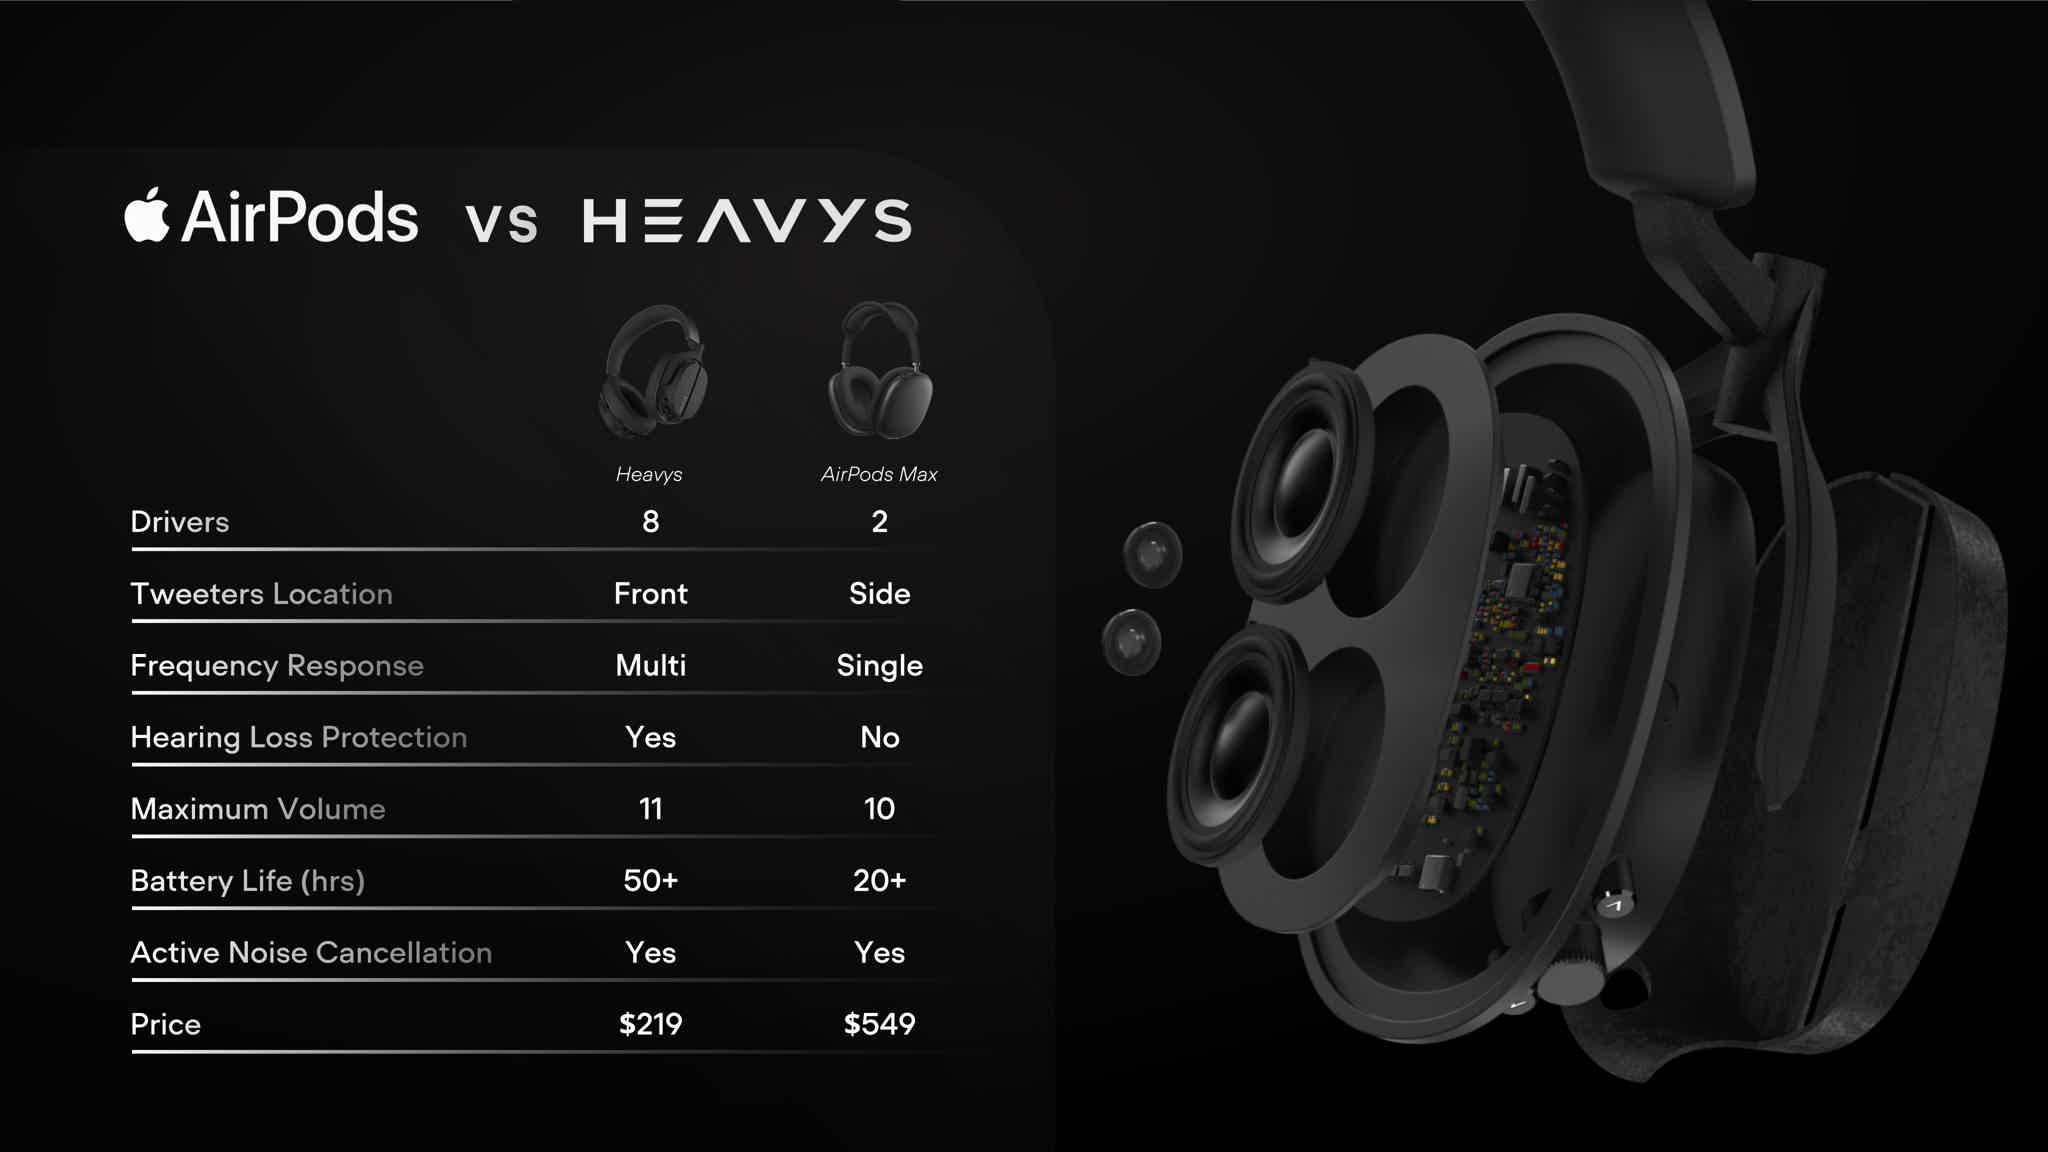 HEAVYS : Groundbreaking Headphones Engineered for Heavy Metal. By